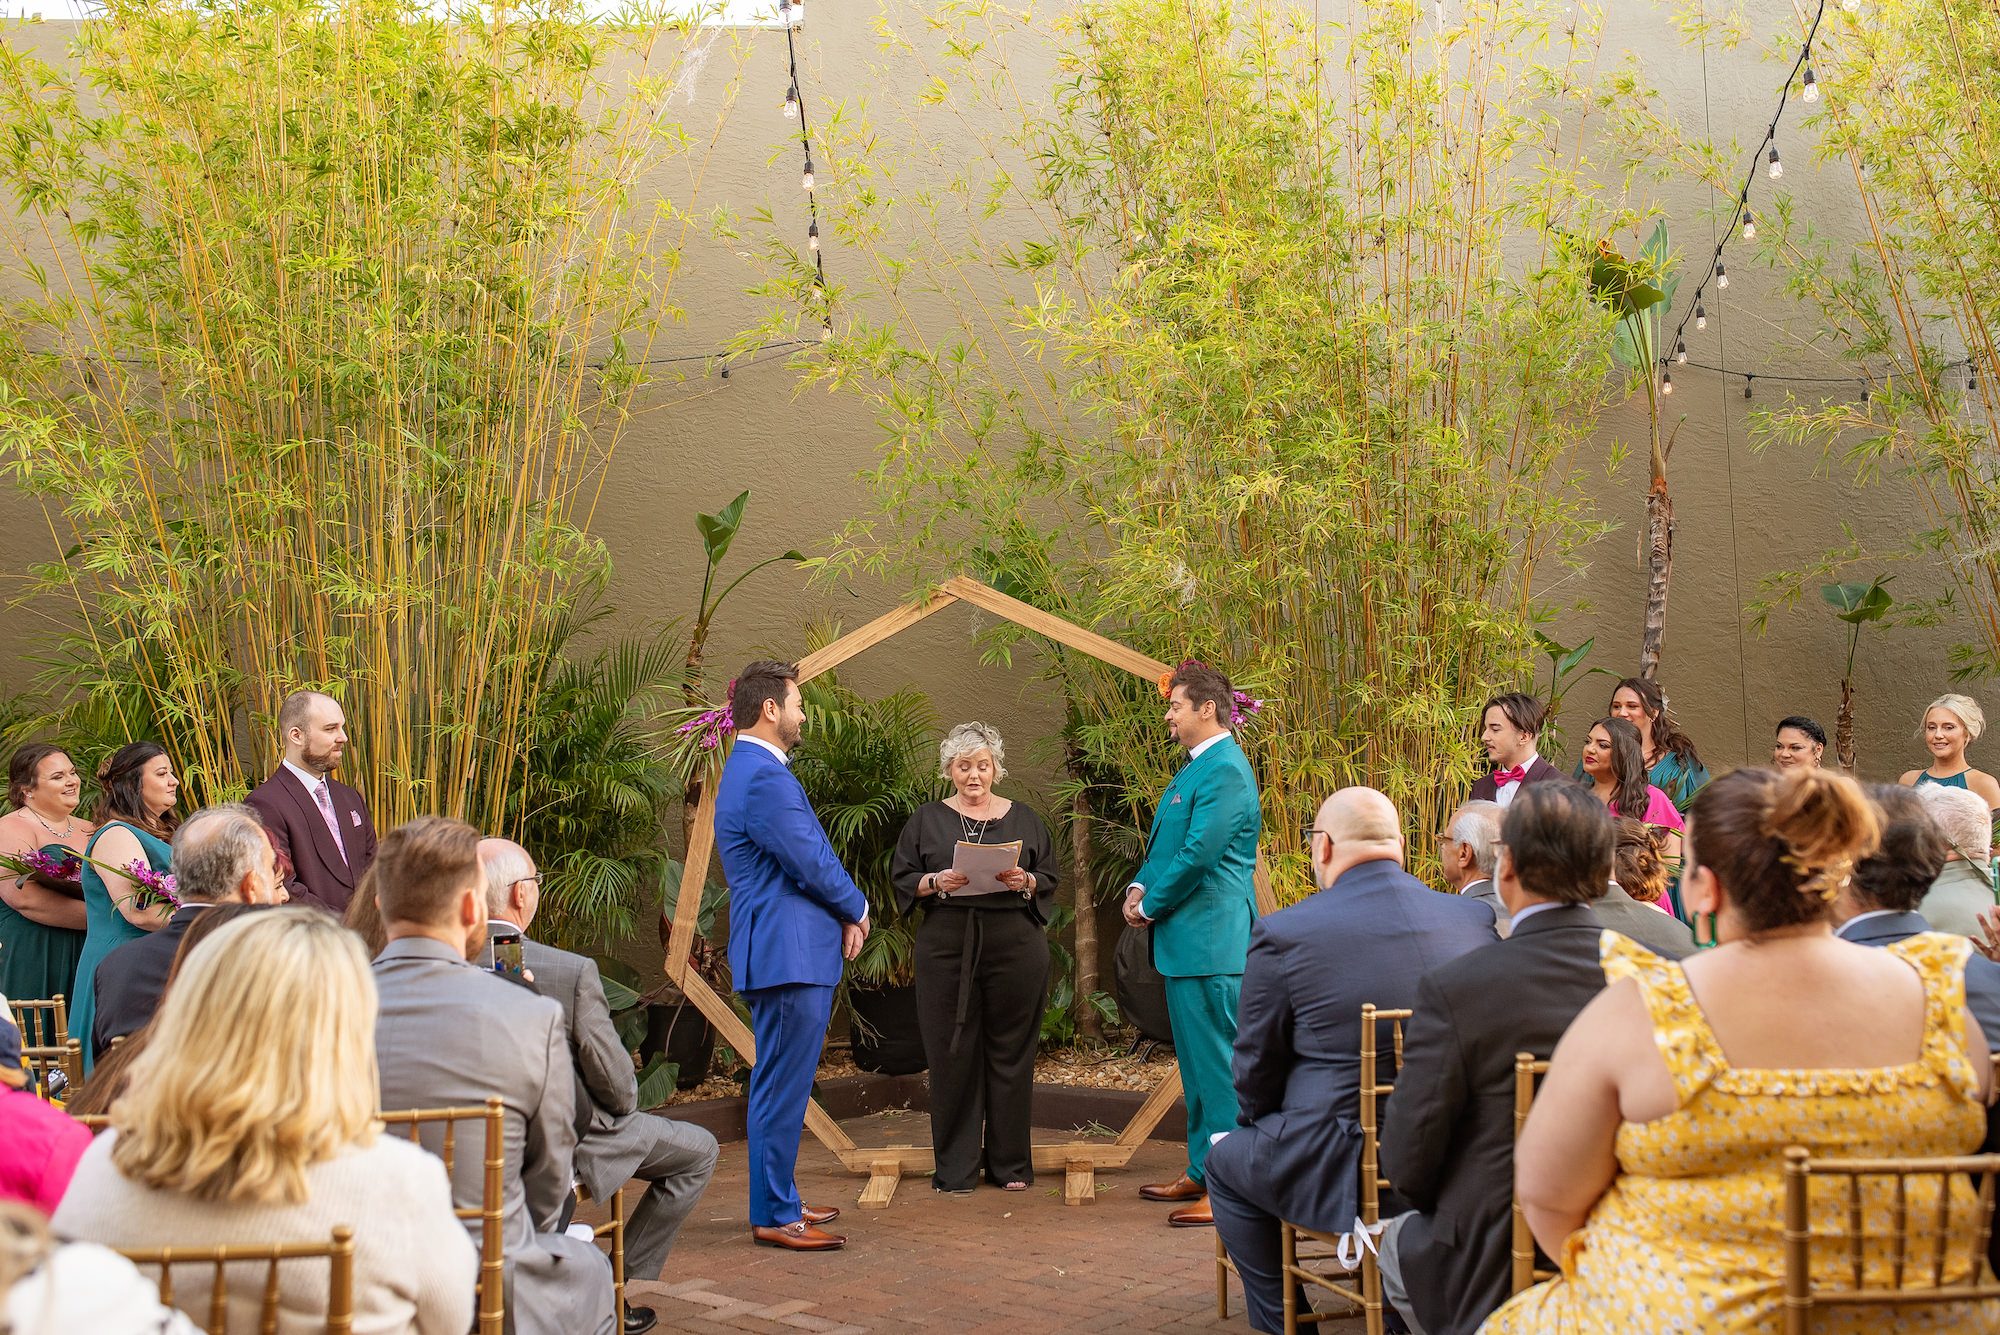 Groom and Groom Exchanging Vows in Tropical Industrial Wedding Ceremony | St. Petersburg Wedding Venue Nova 535 | Florida Photographer Kristen Marie Photography